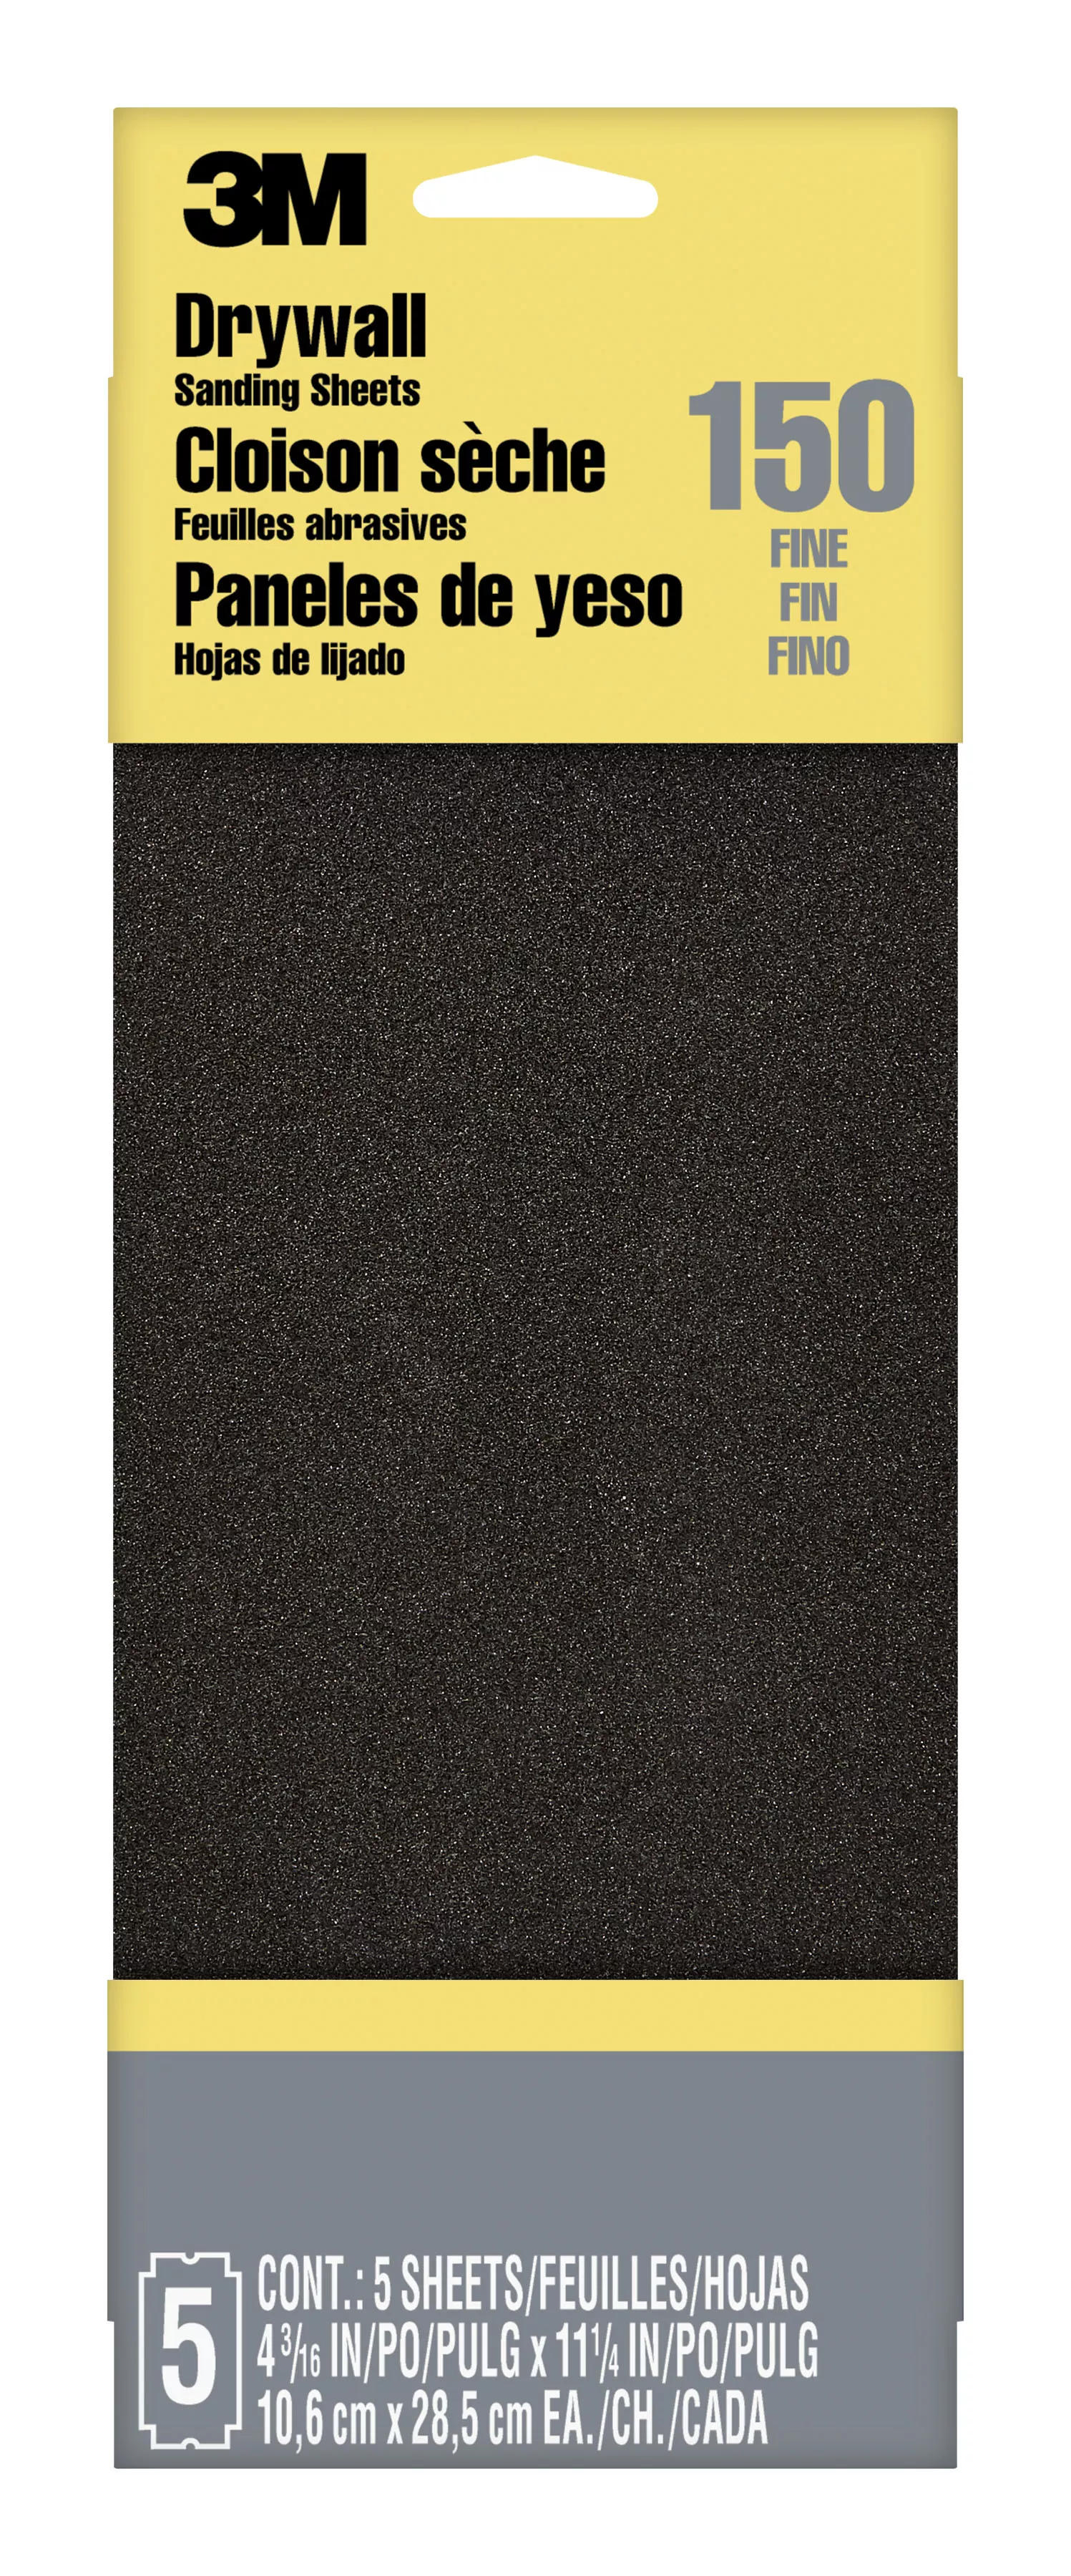 3M™ Drywall Sanding Sheets 9091DC-NA 4 3/16 in x 11 1/4 in x in, Fine
grit, 5/pk, Open Stock